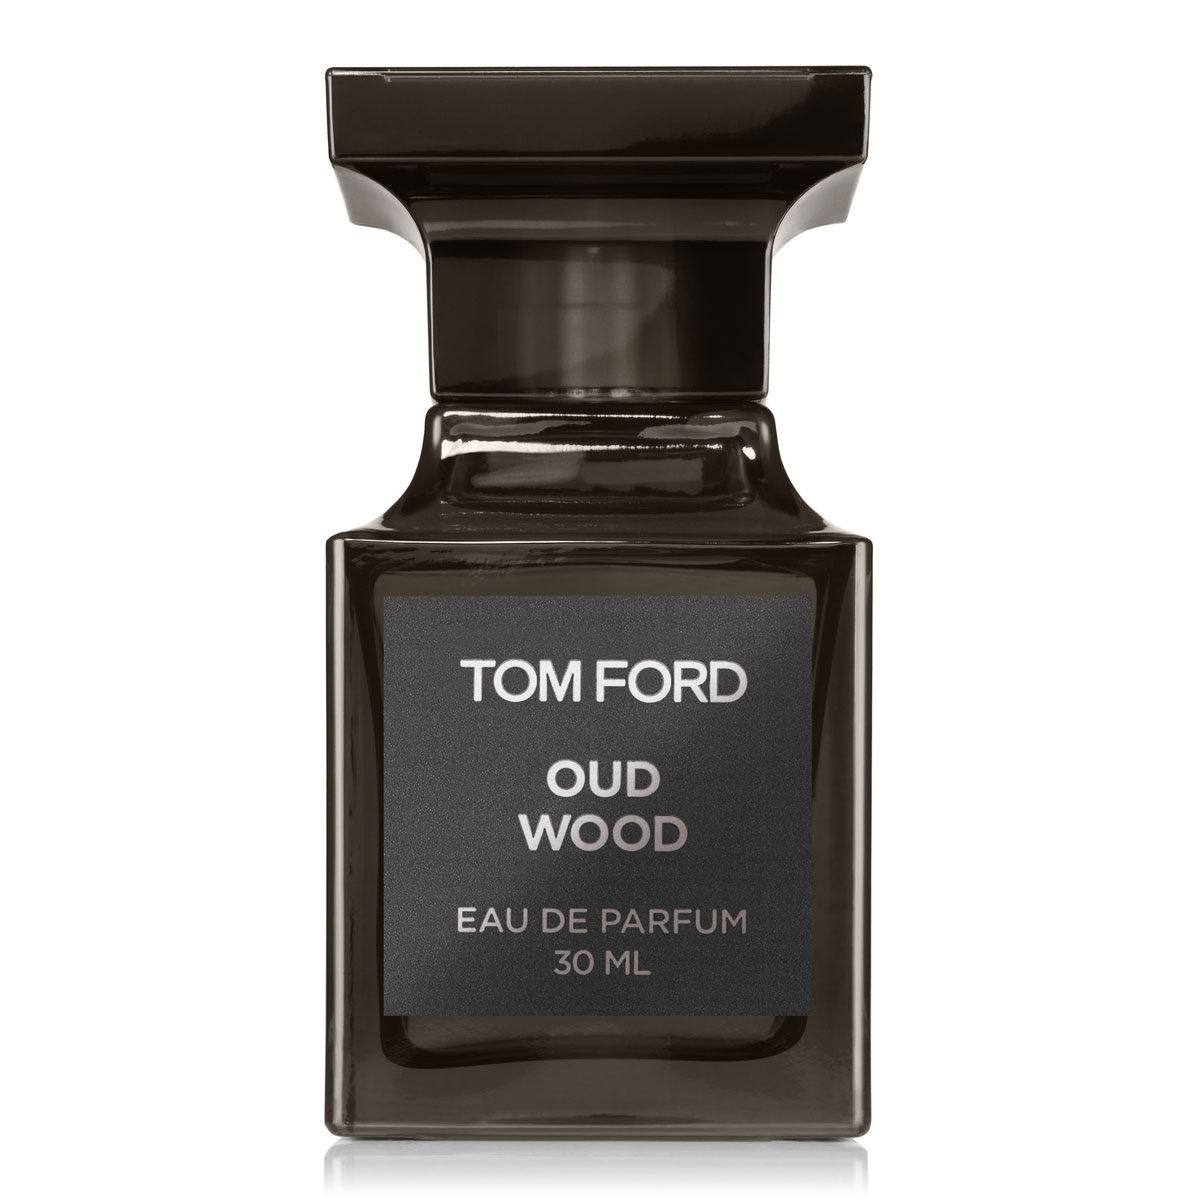 Tom Ford Oud Wood Eau De Parfum 30Ml